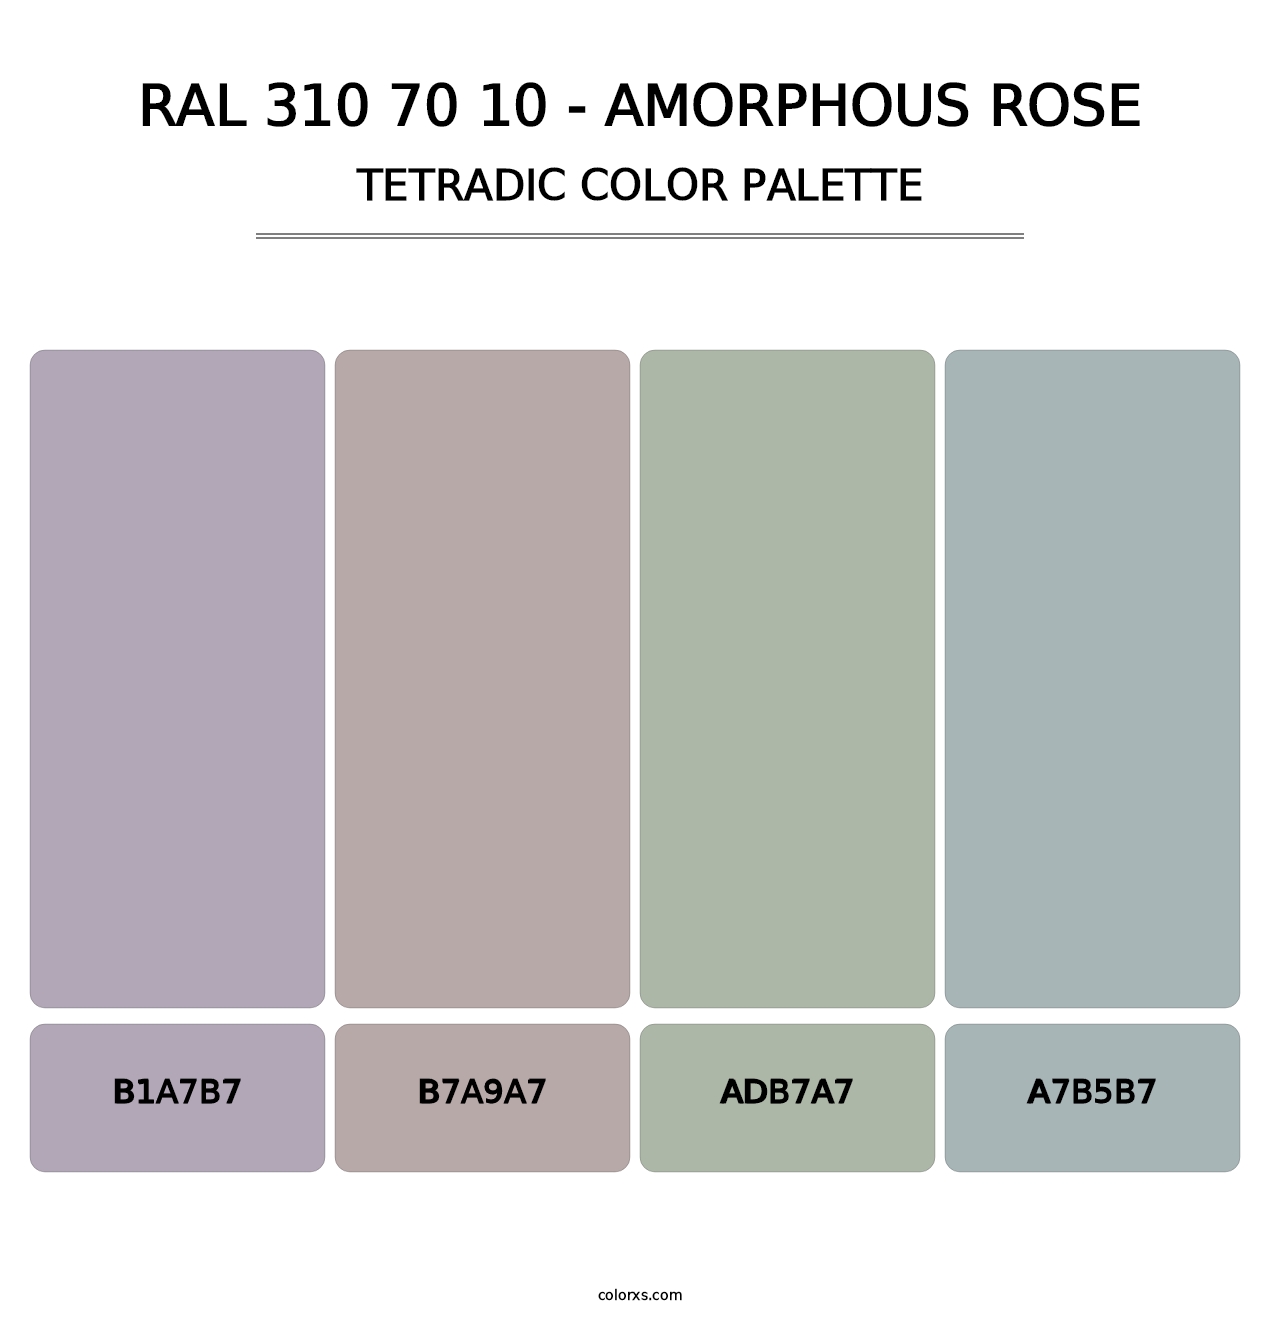 RAL 310 70 10 - Amorphous Rose - Tetradic Color Palette